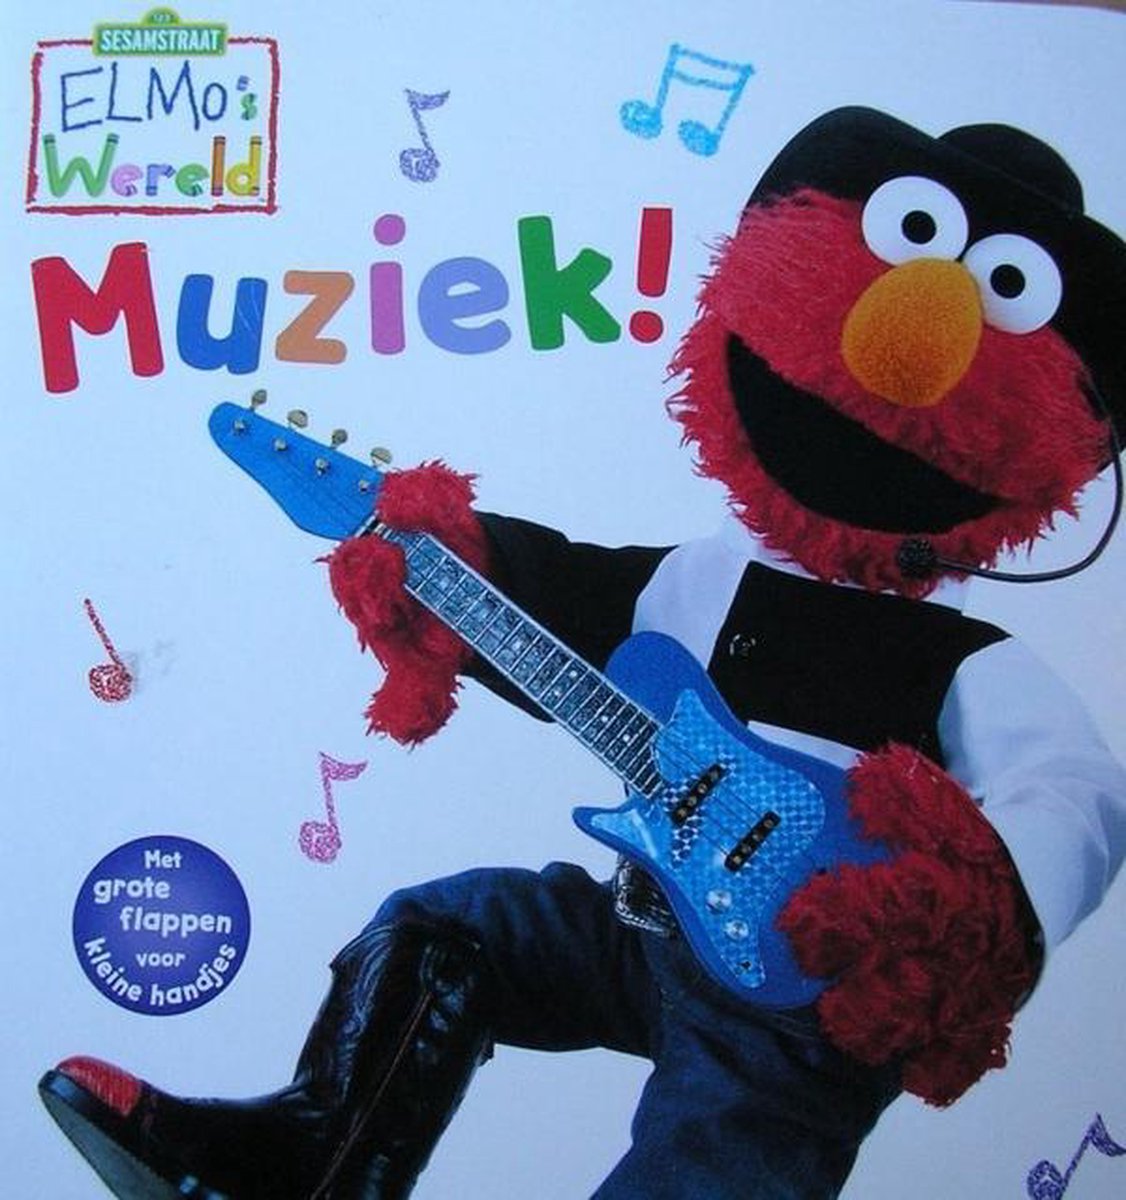 Elmo's Wereld Muziek !